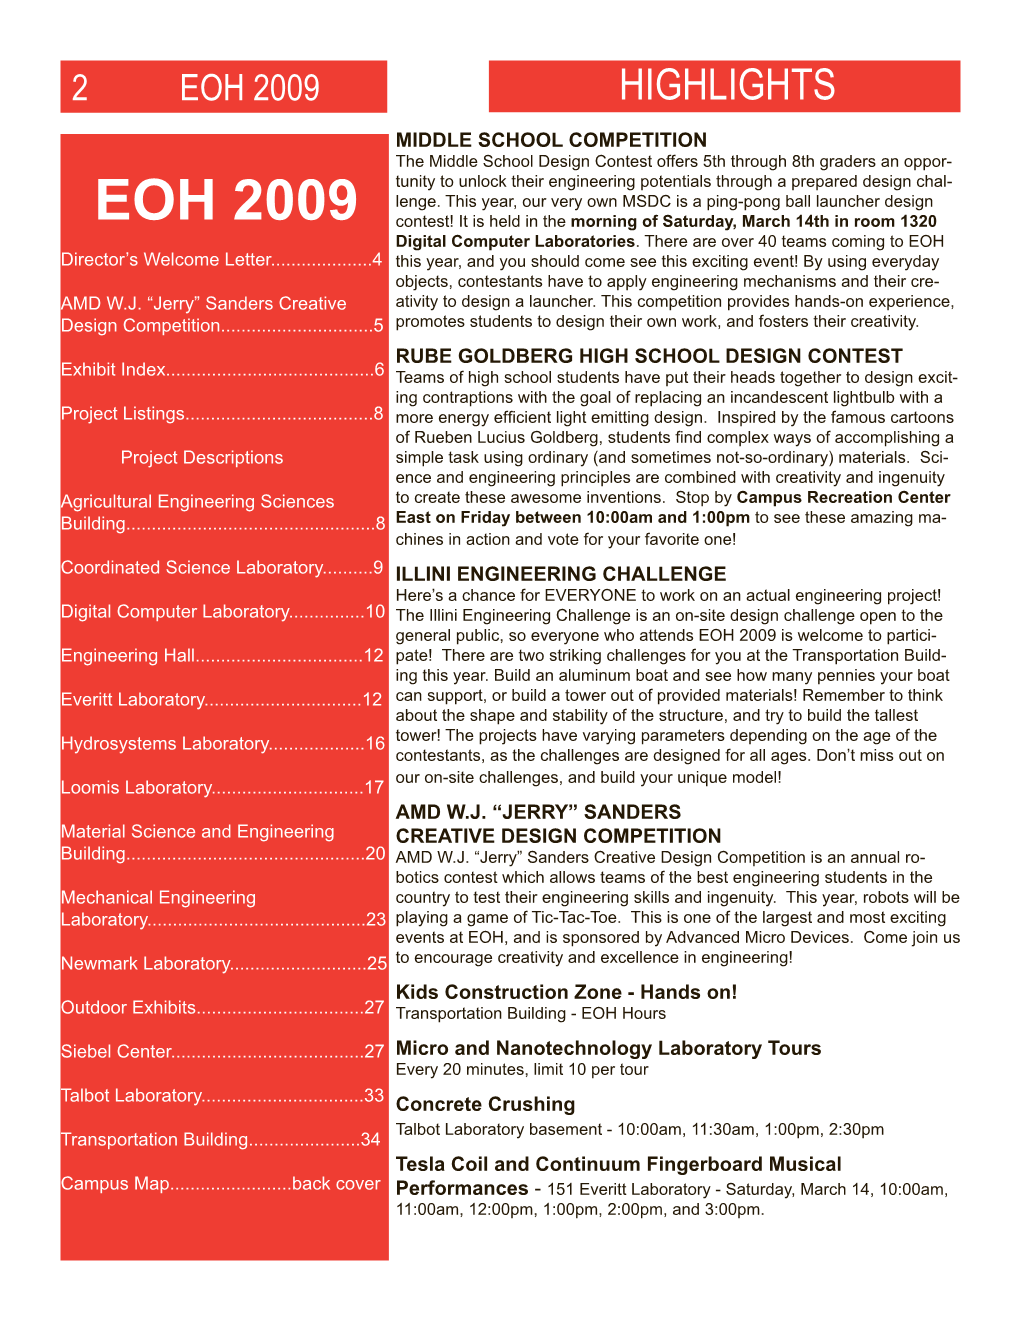 Eoh 2009 Highlights